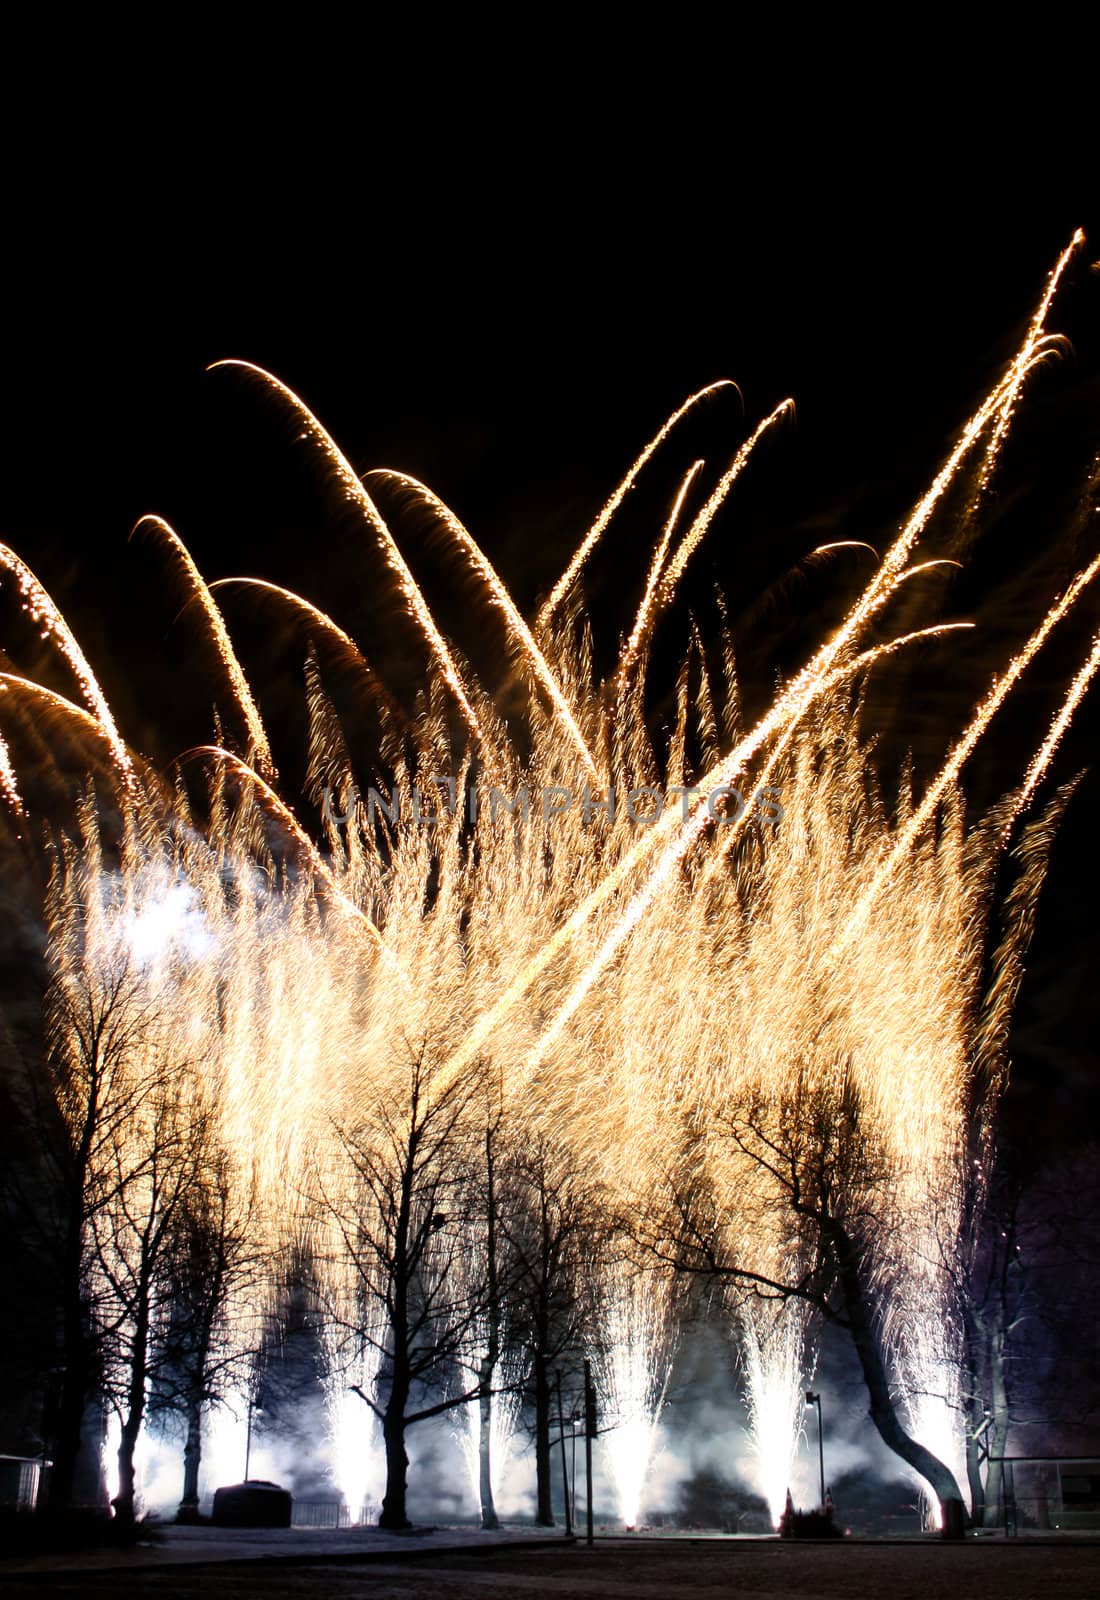 Big fireworks display against park trees silhouette